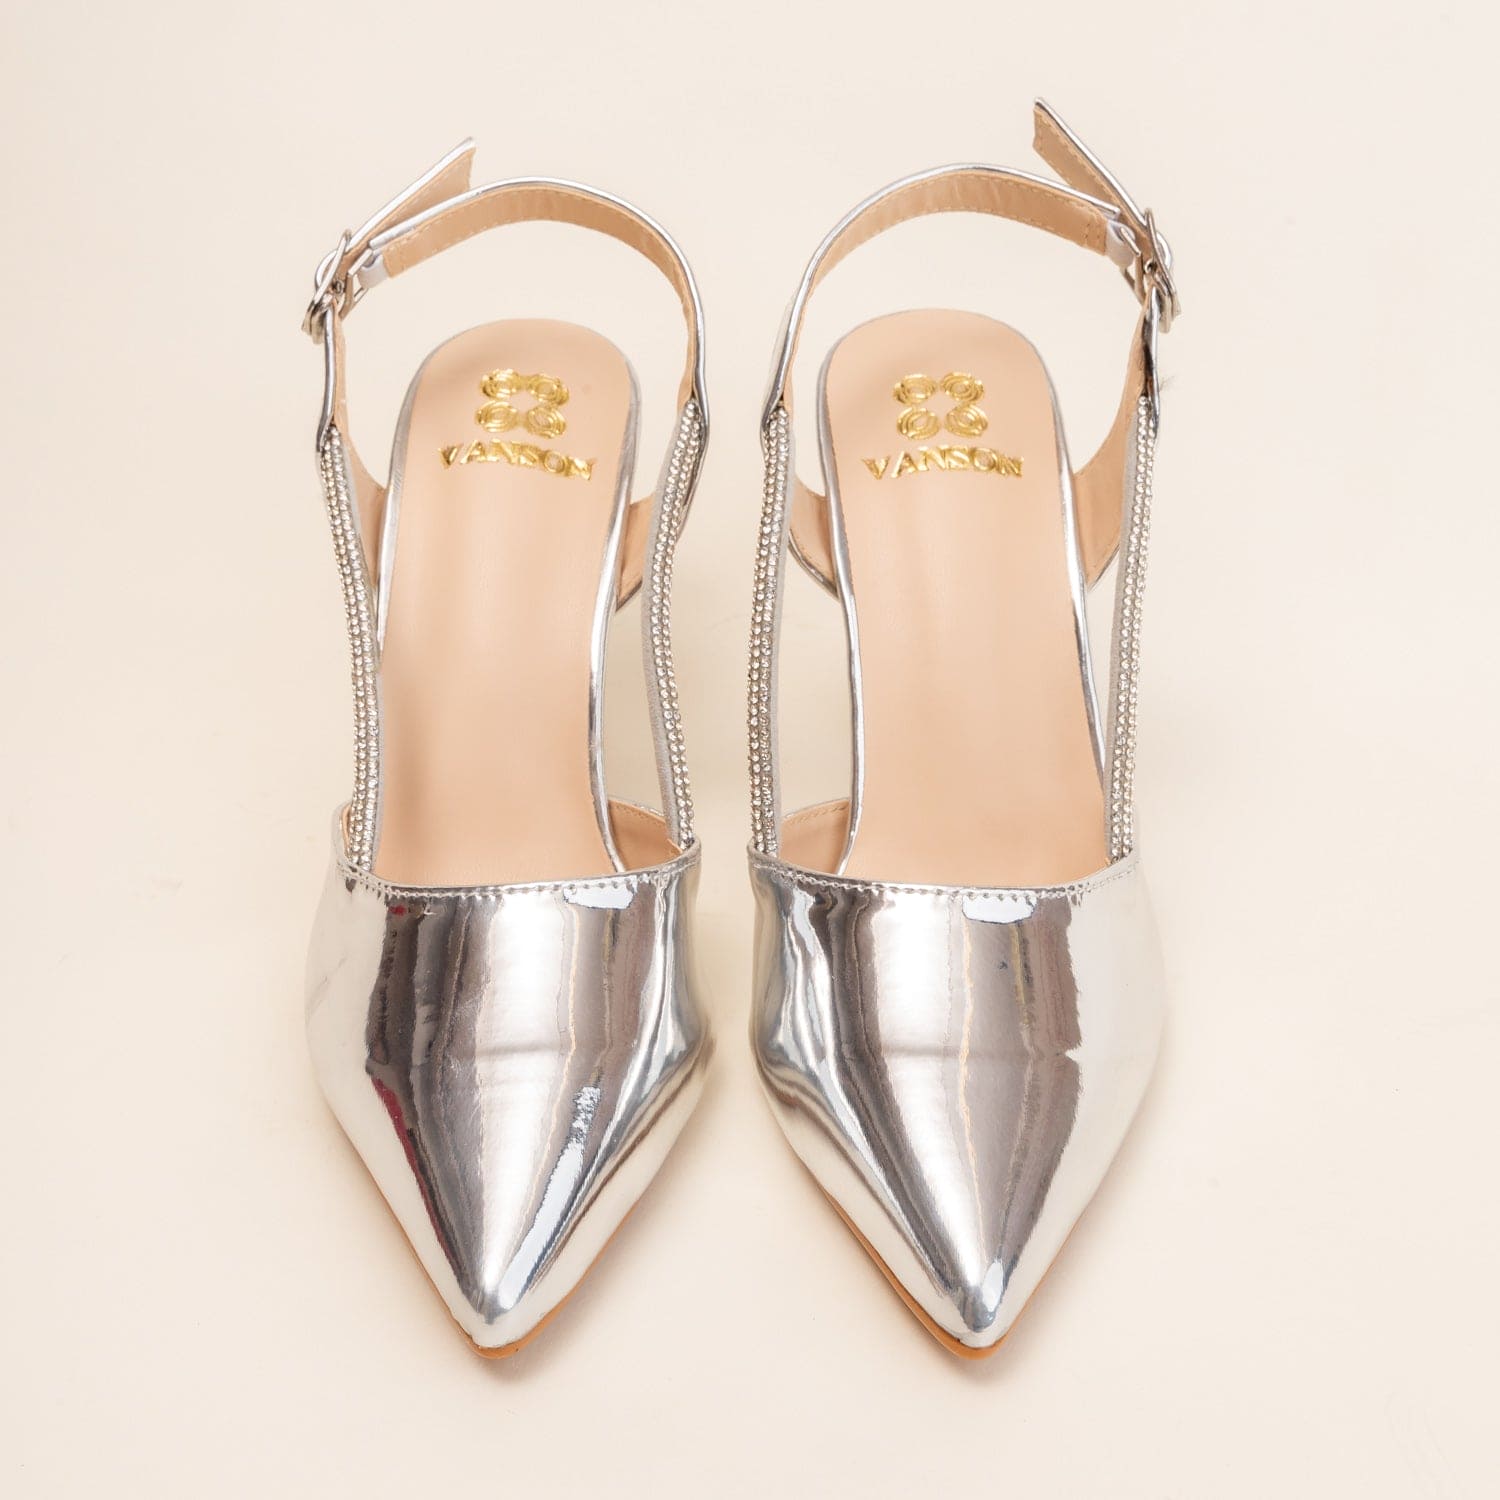 GALA GLINT-Embellished Sandal in-Silver.